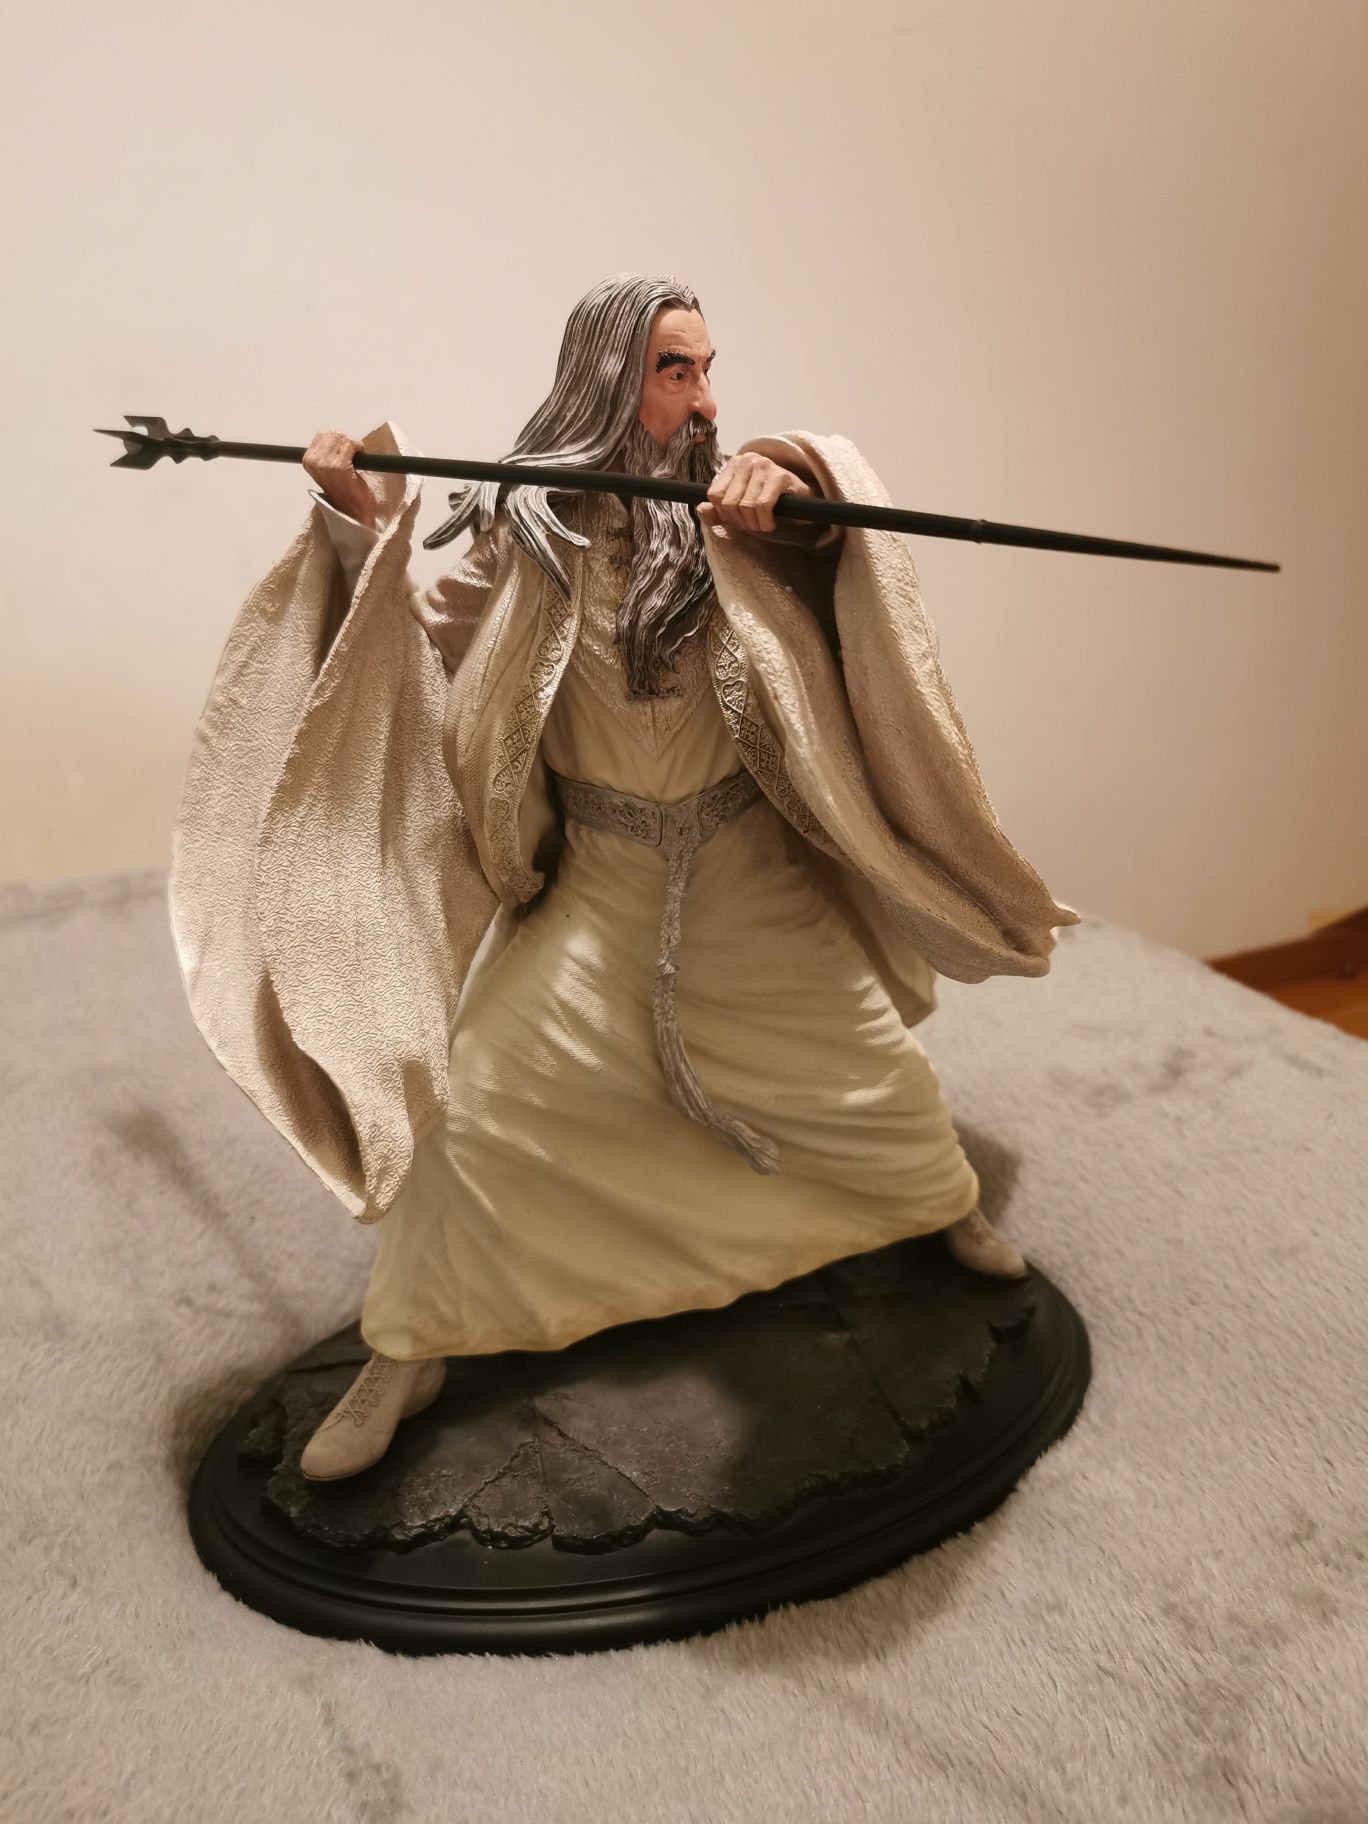 Saruman the White at Dol Guldur - Weta Workshop